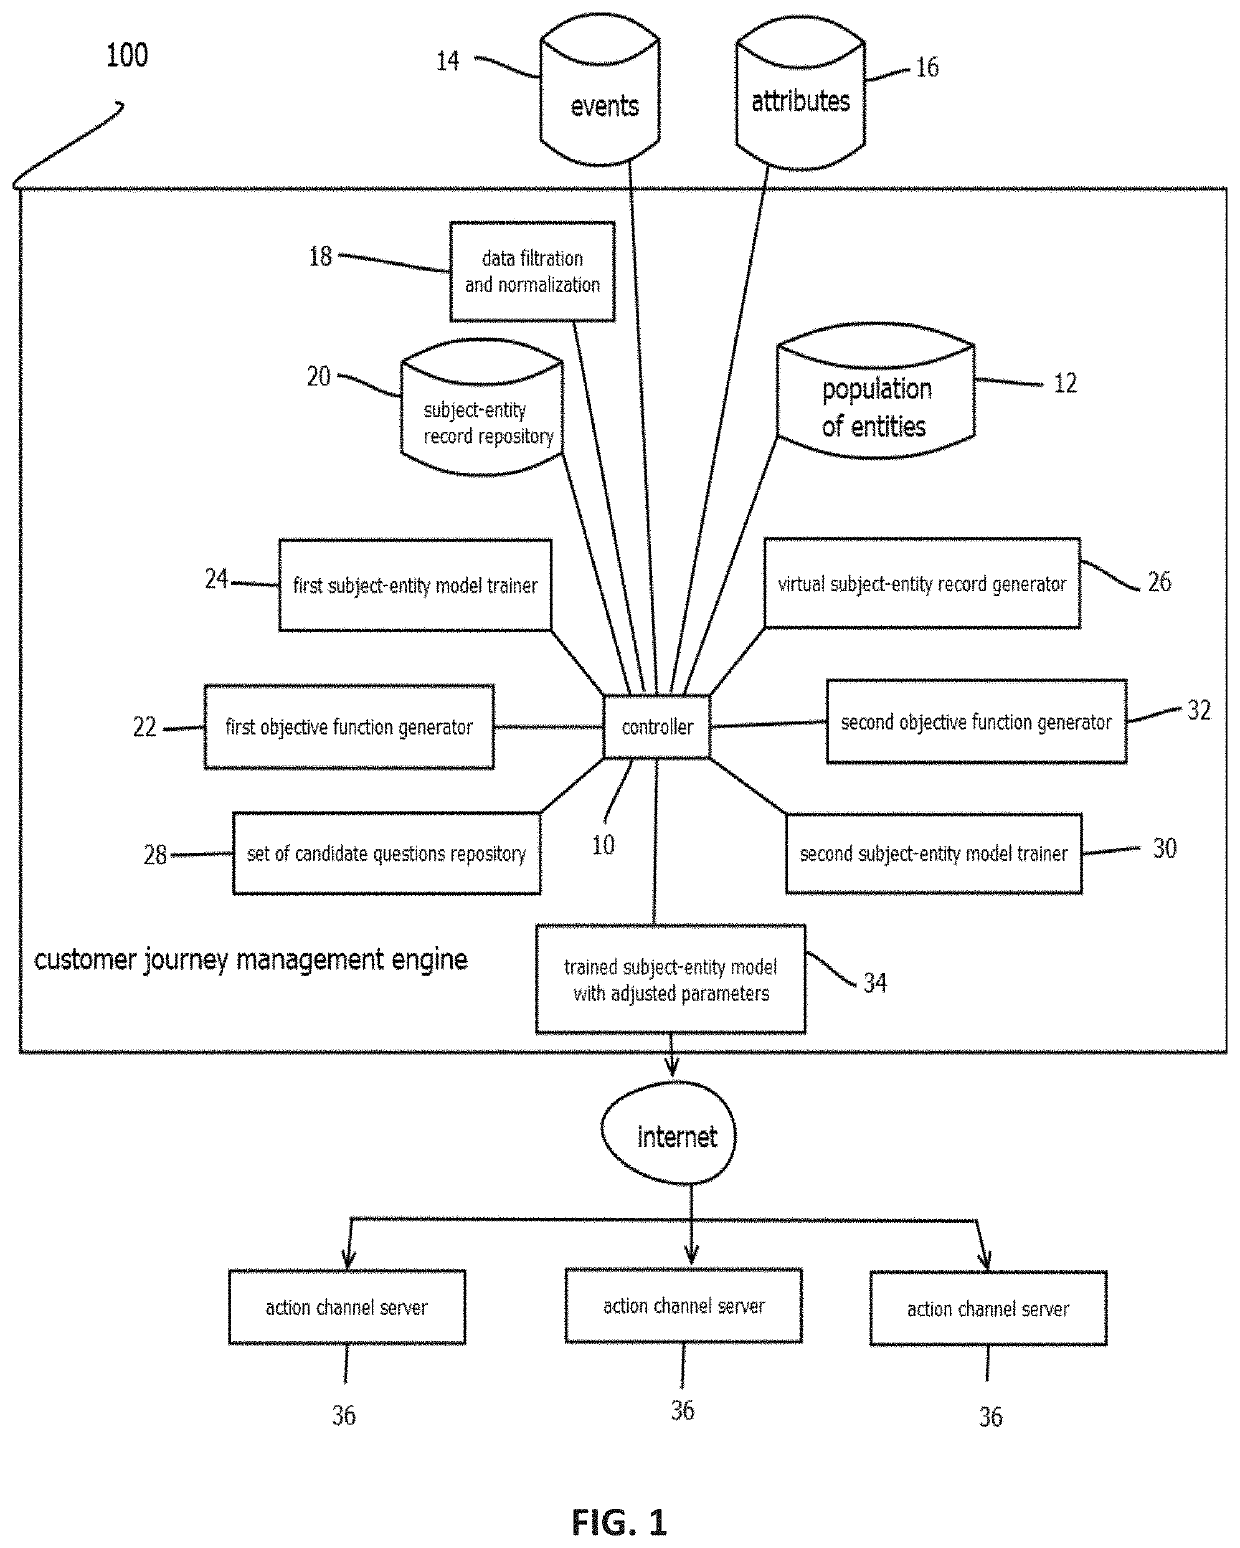 Customer journey management engine